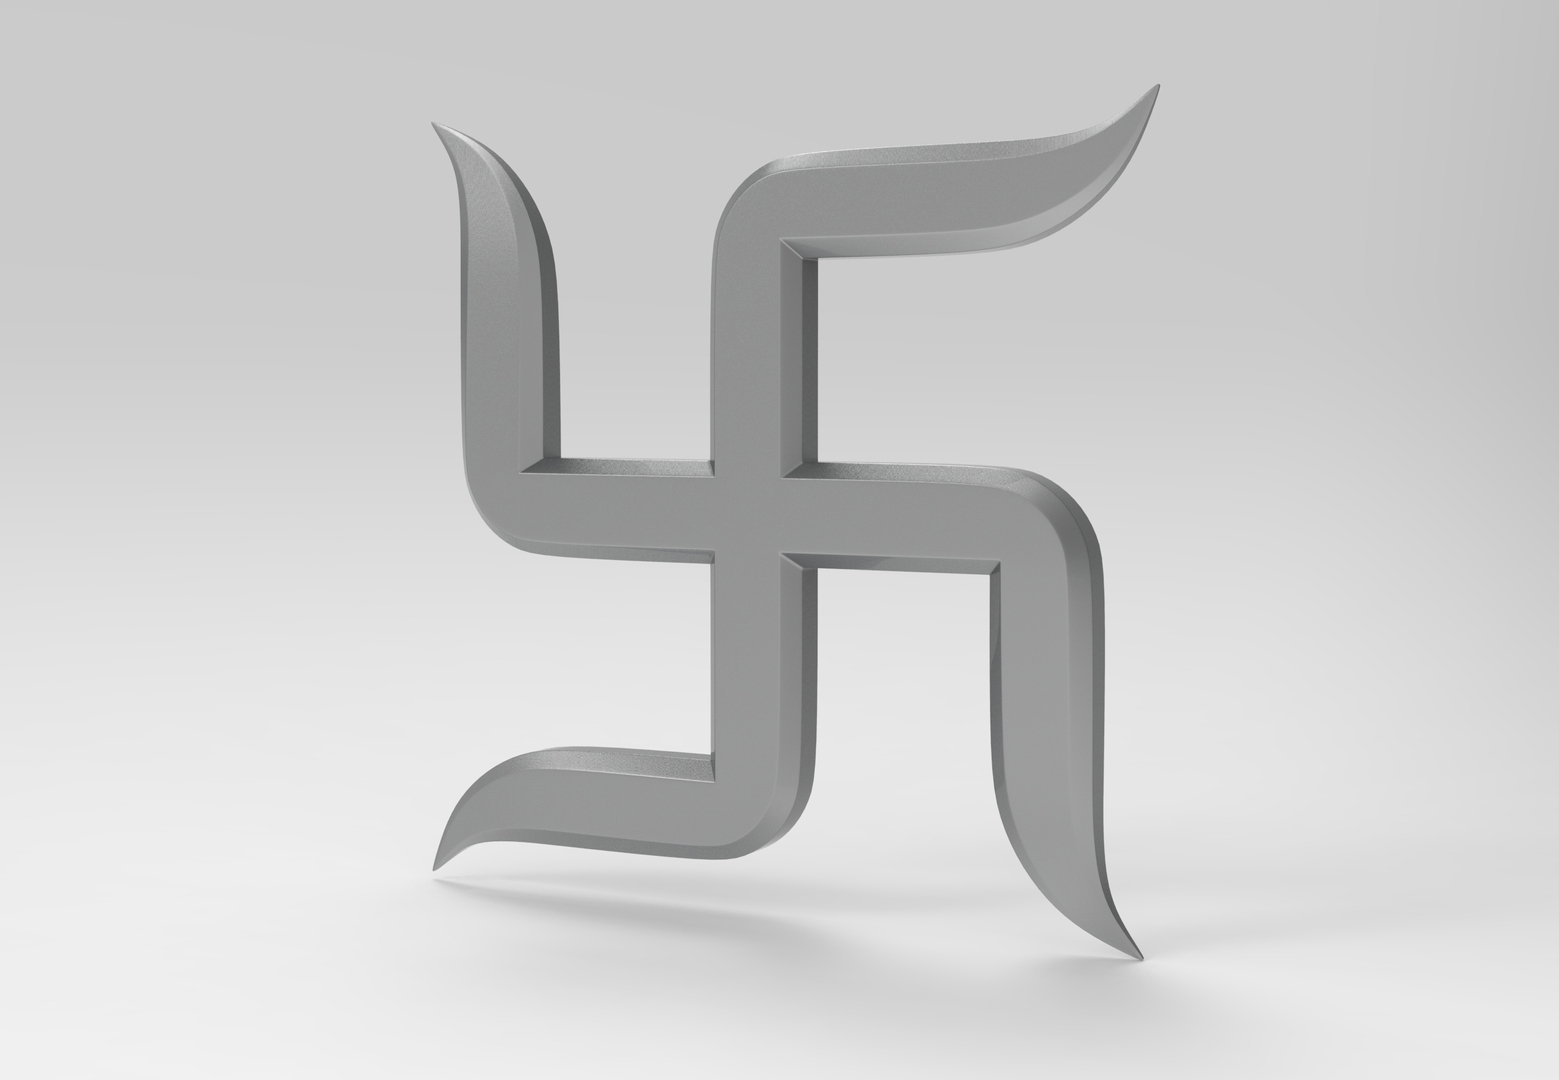 Design Swastik (स्वस्तिक) Logo in Adobe Illustrator. - YouTube